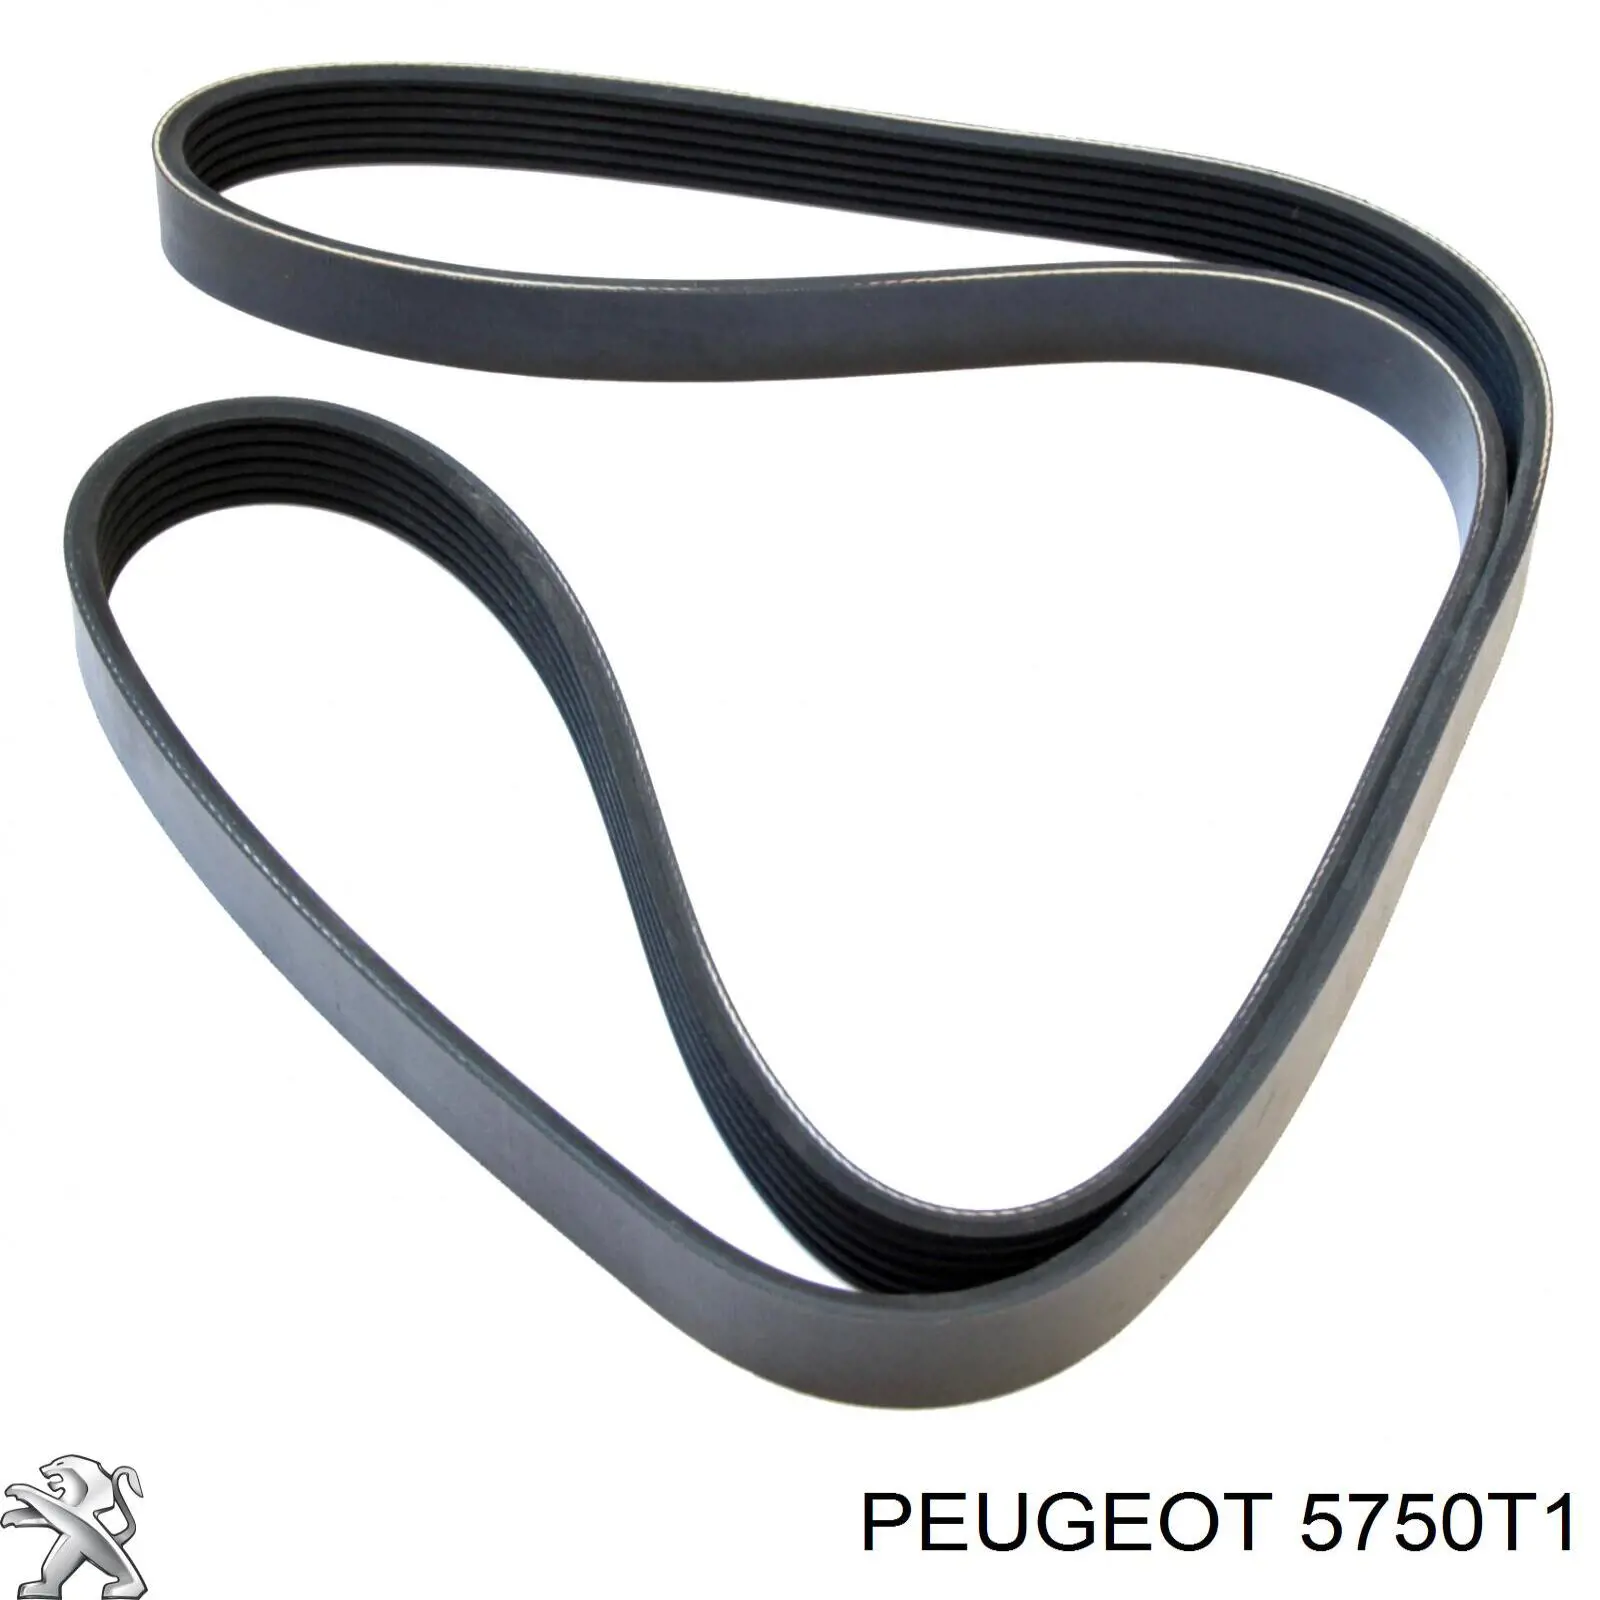 5750T1 Peugeot/Citroen correa trapezoidal